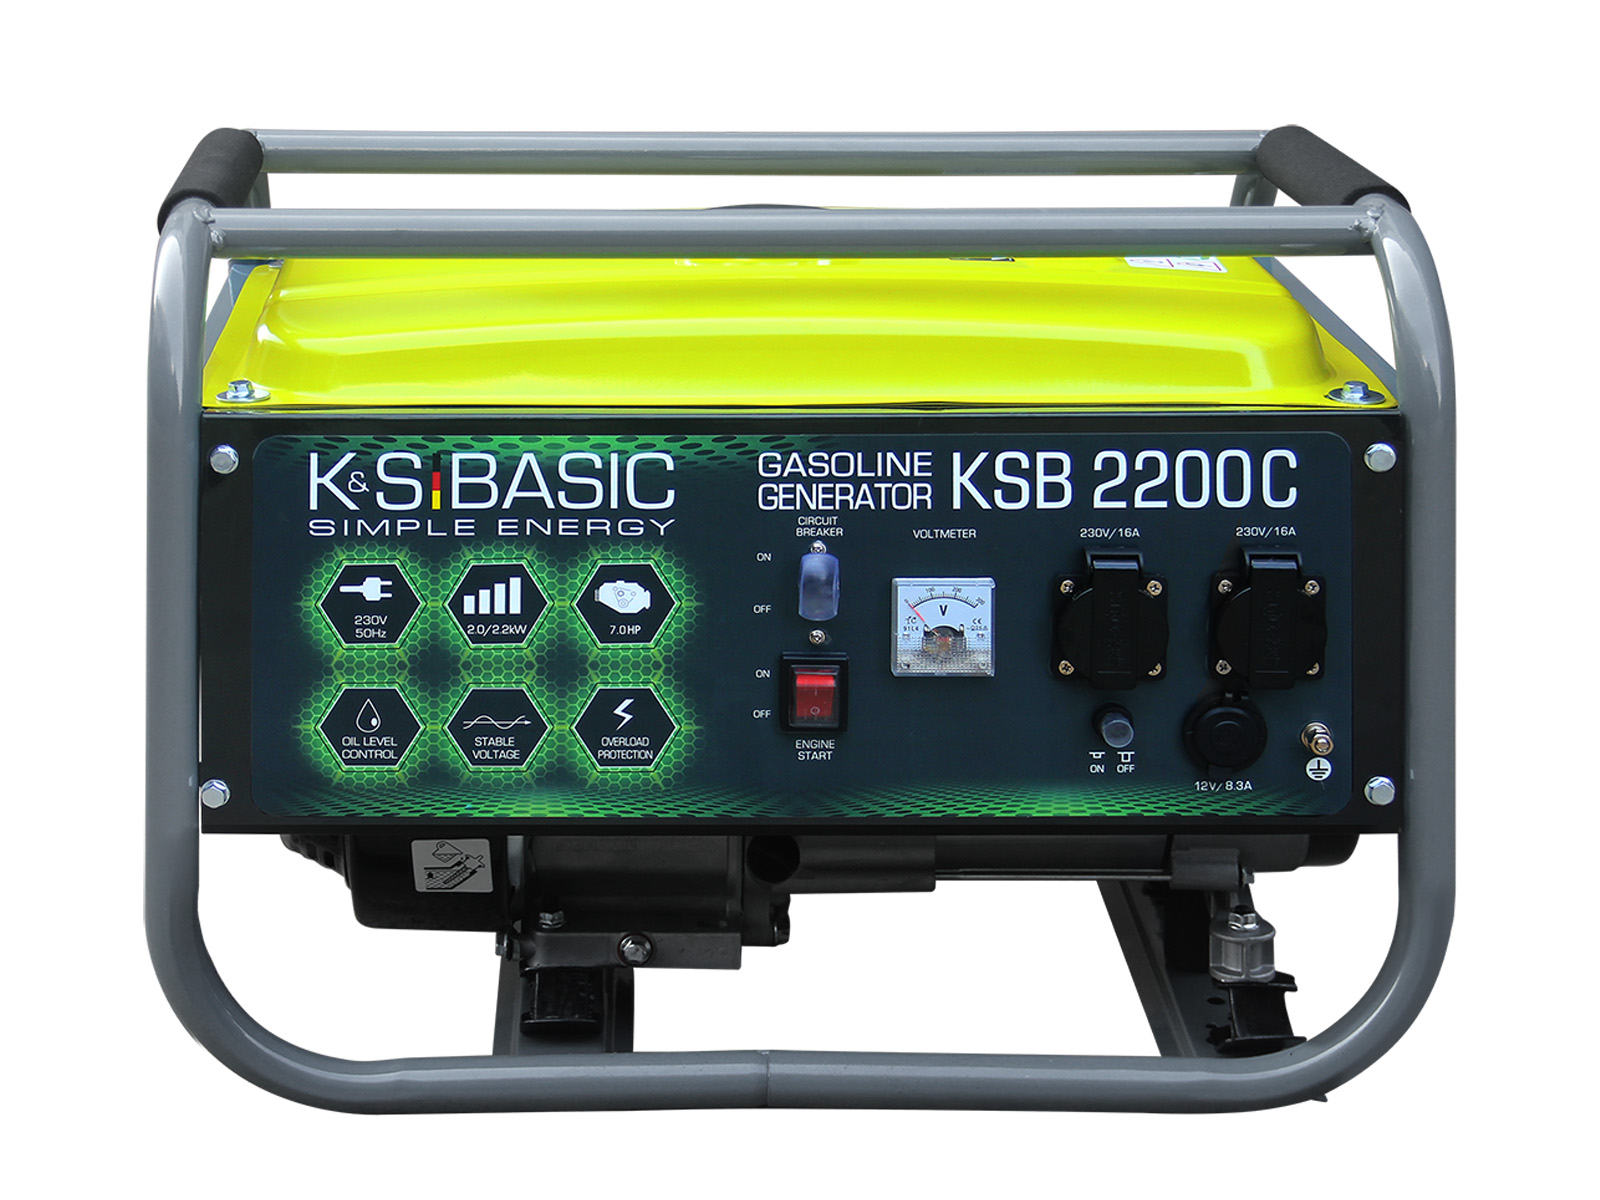 Gasoline generator "K&S BASIC" KSB 2200C